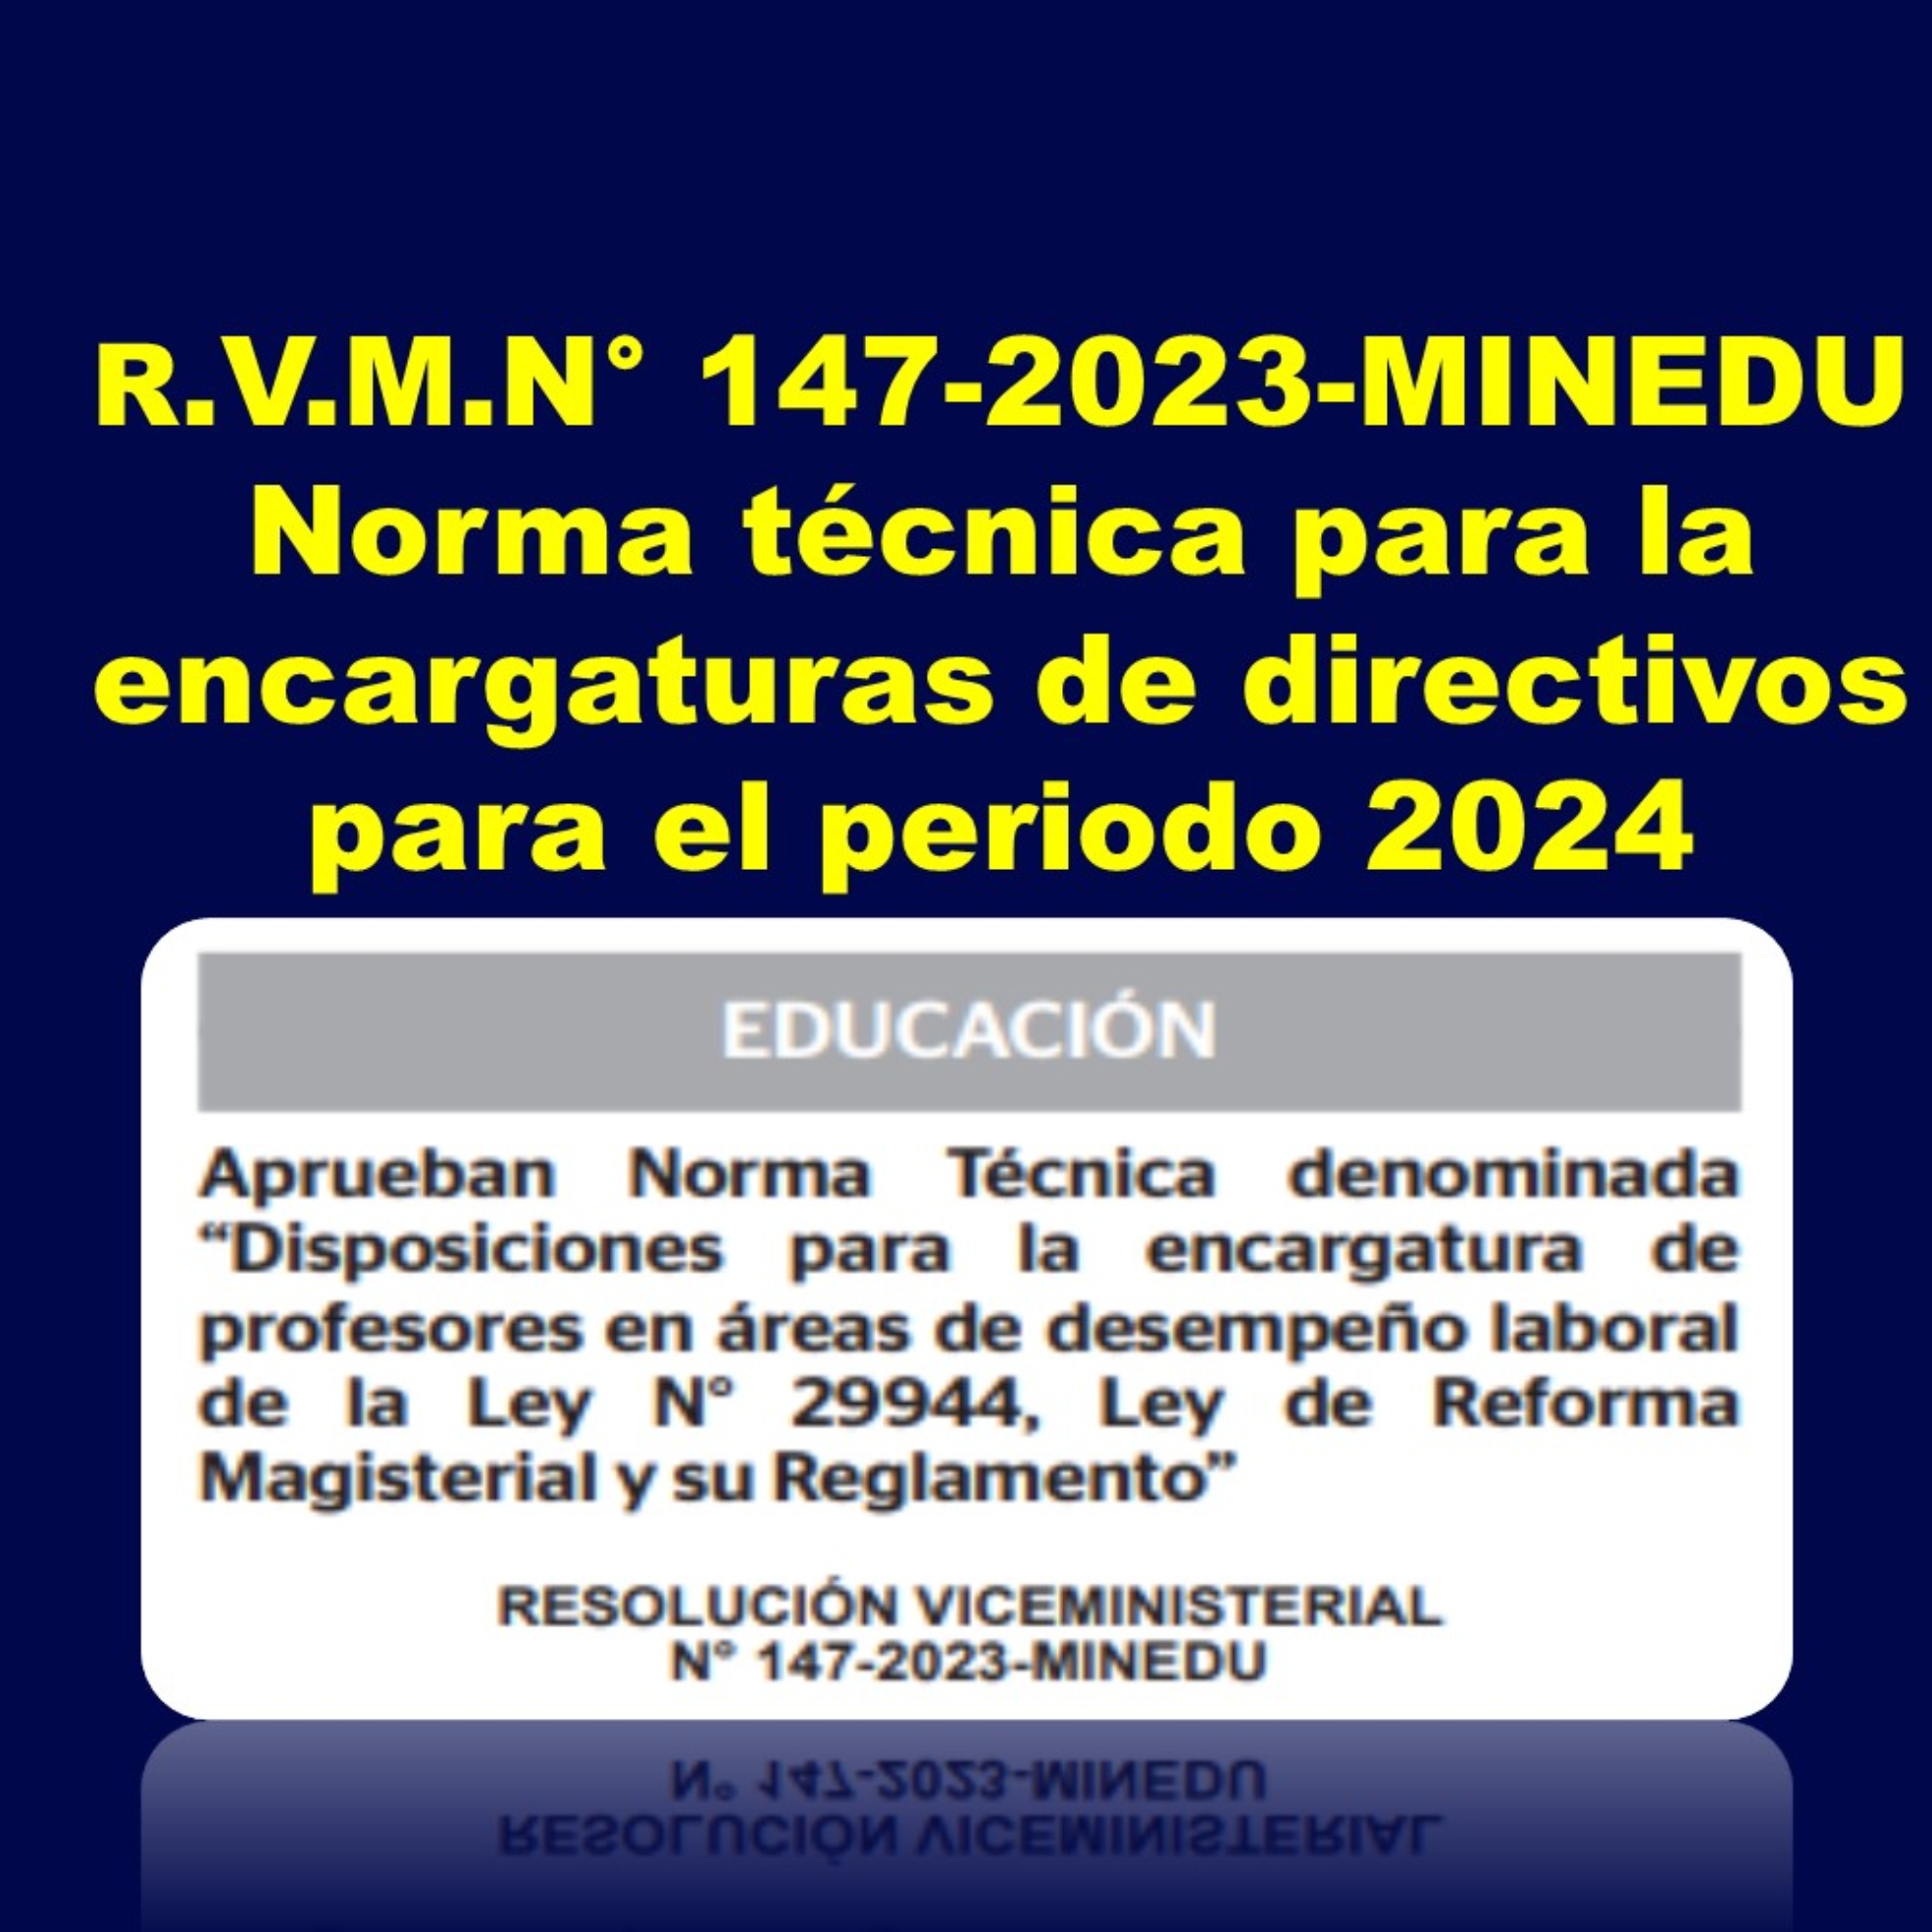 R.V.M.N°147-2023-MINEDU norma técnica para las encargaturas de directivos 2024